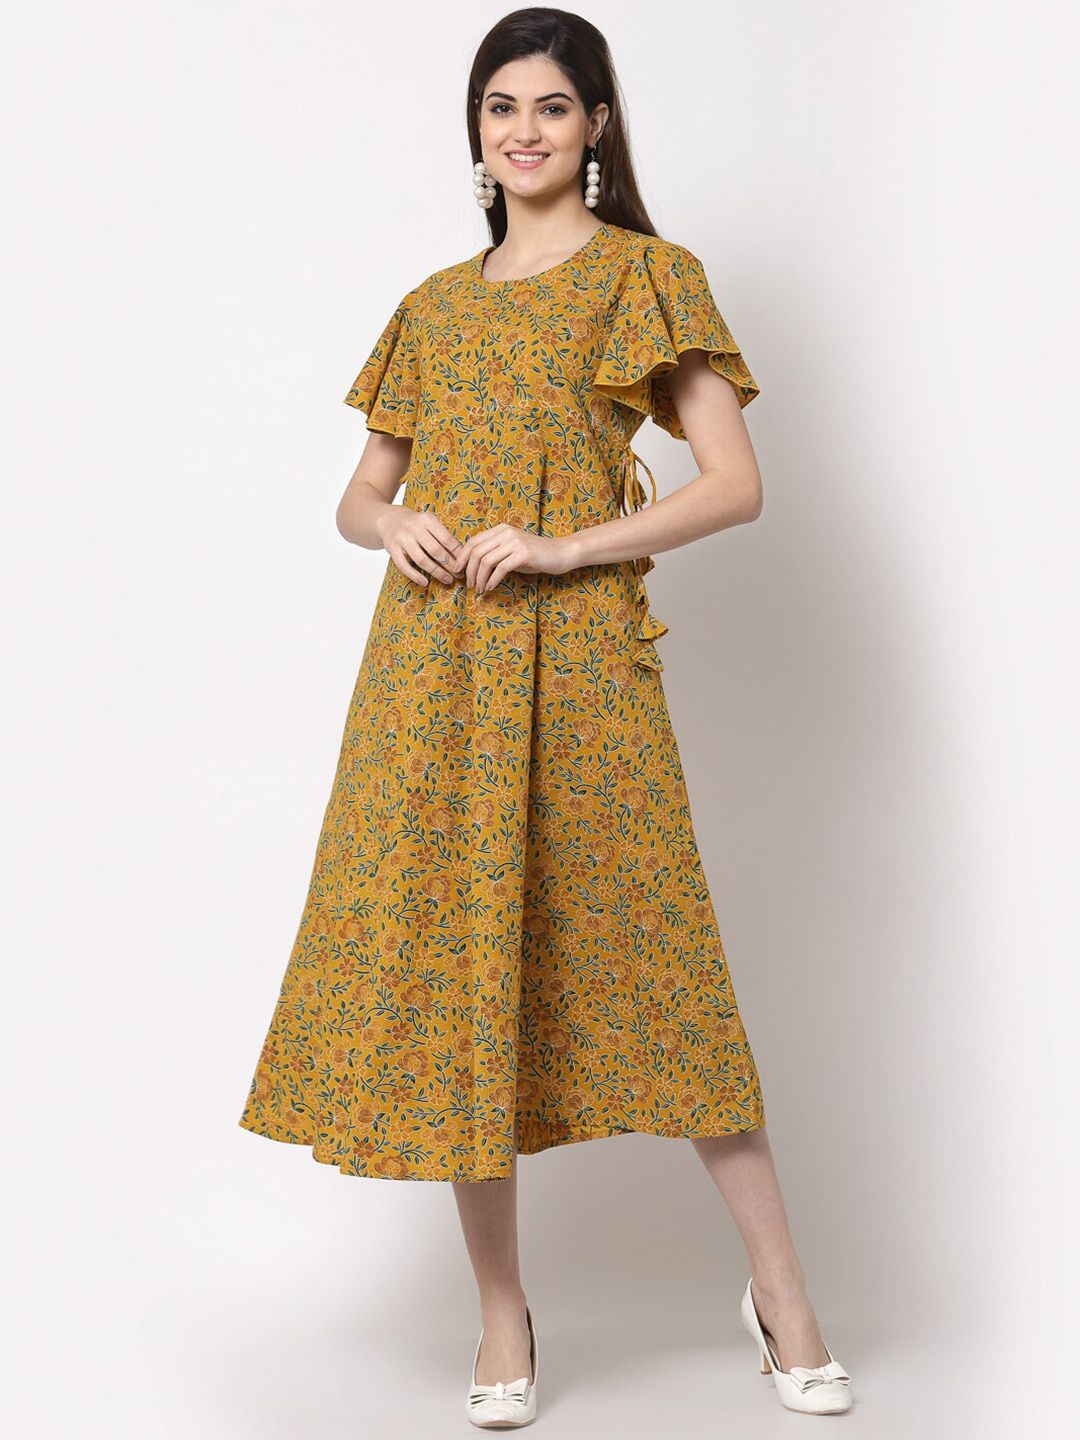 KBZ Yellow Floral Ethnic Cotton Midi Dress Price in India